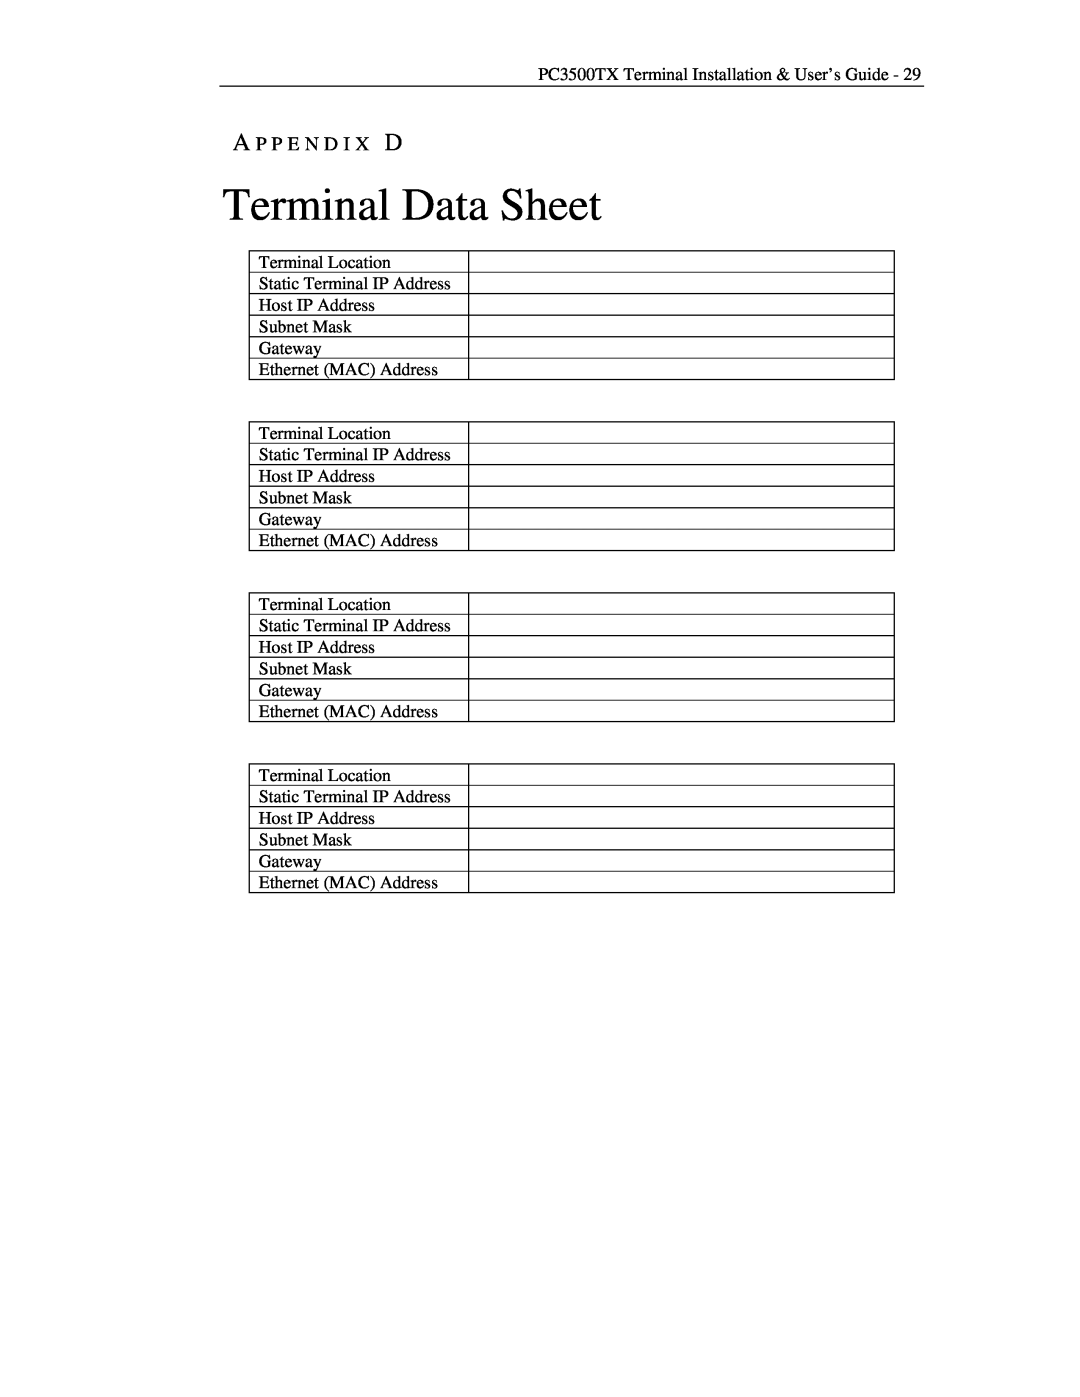 Lathem PC3500TX manual Terminal Data Sheet, A P P E N D I X D 